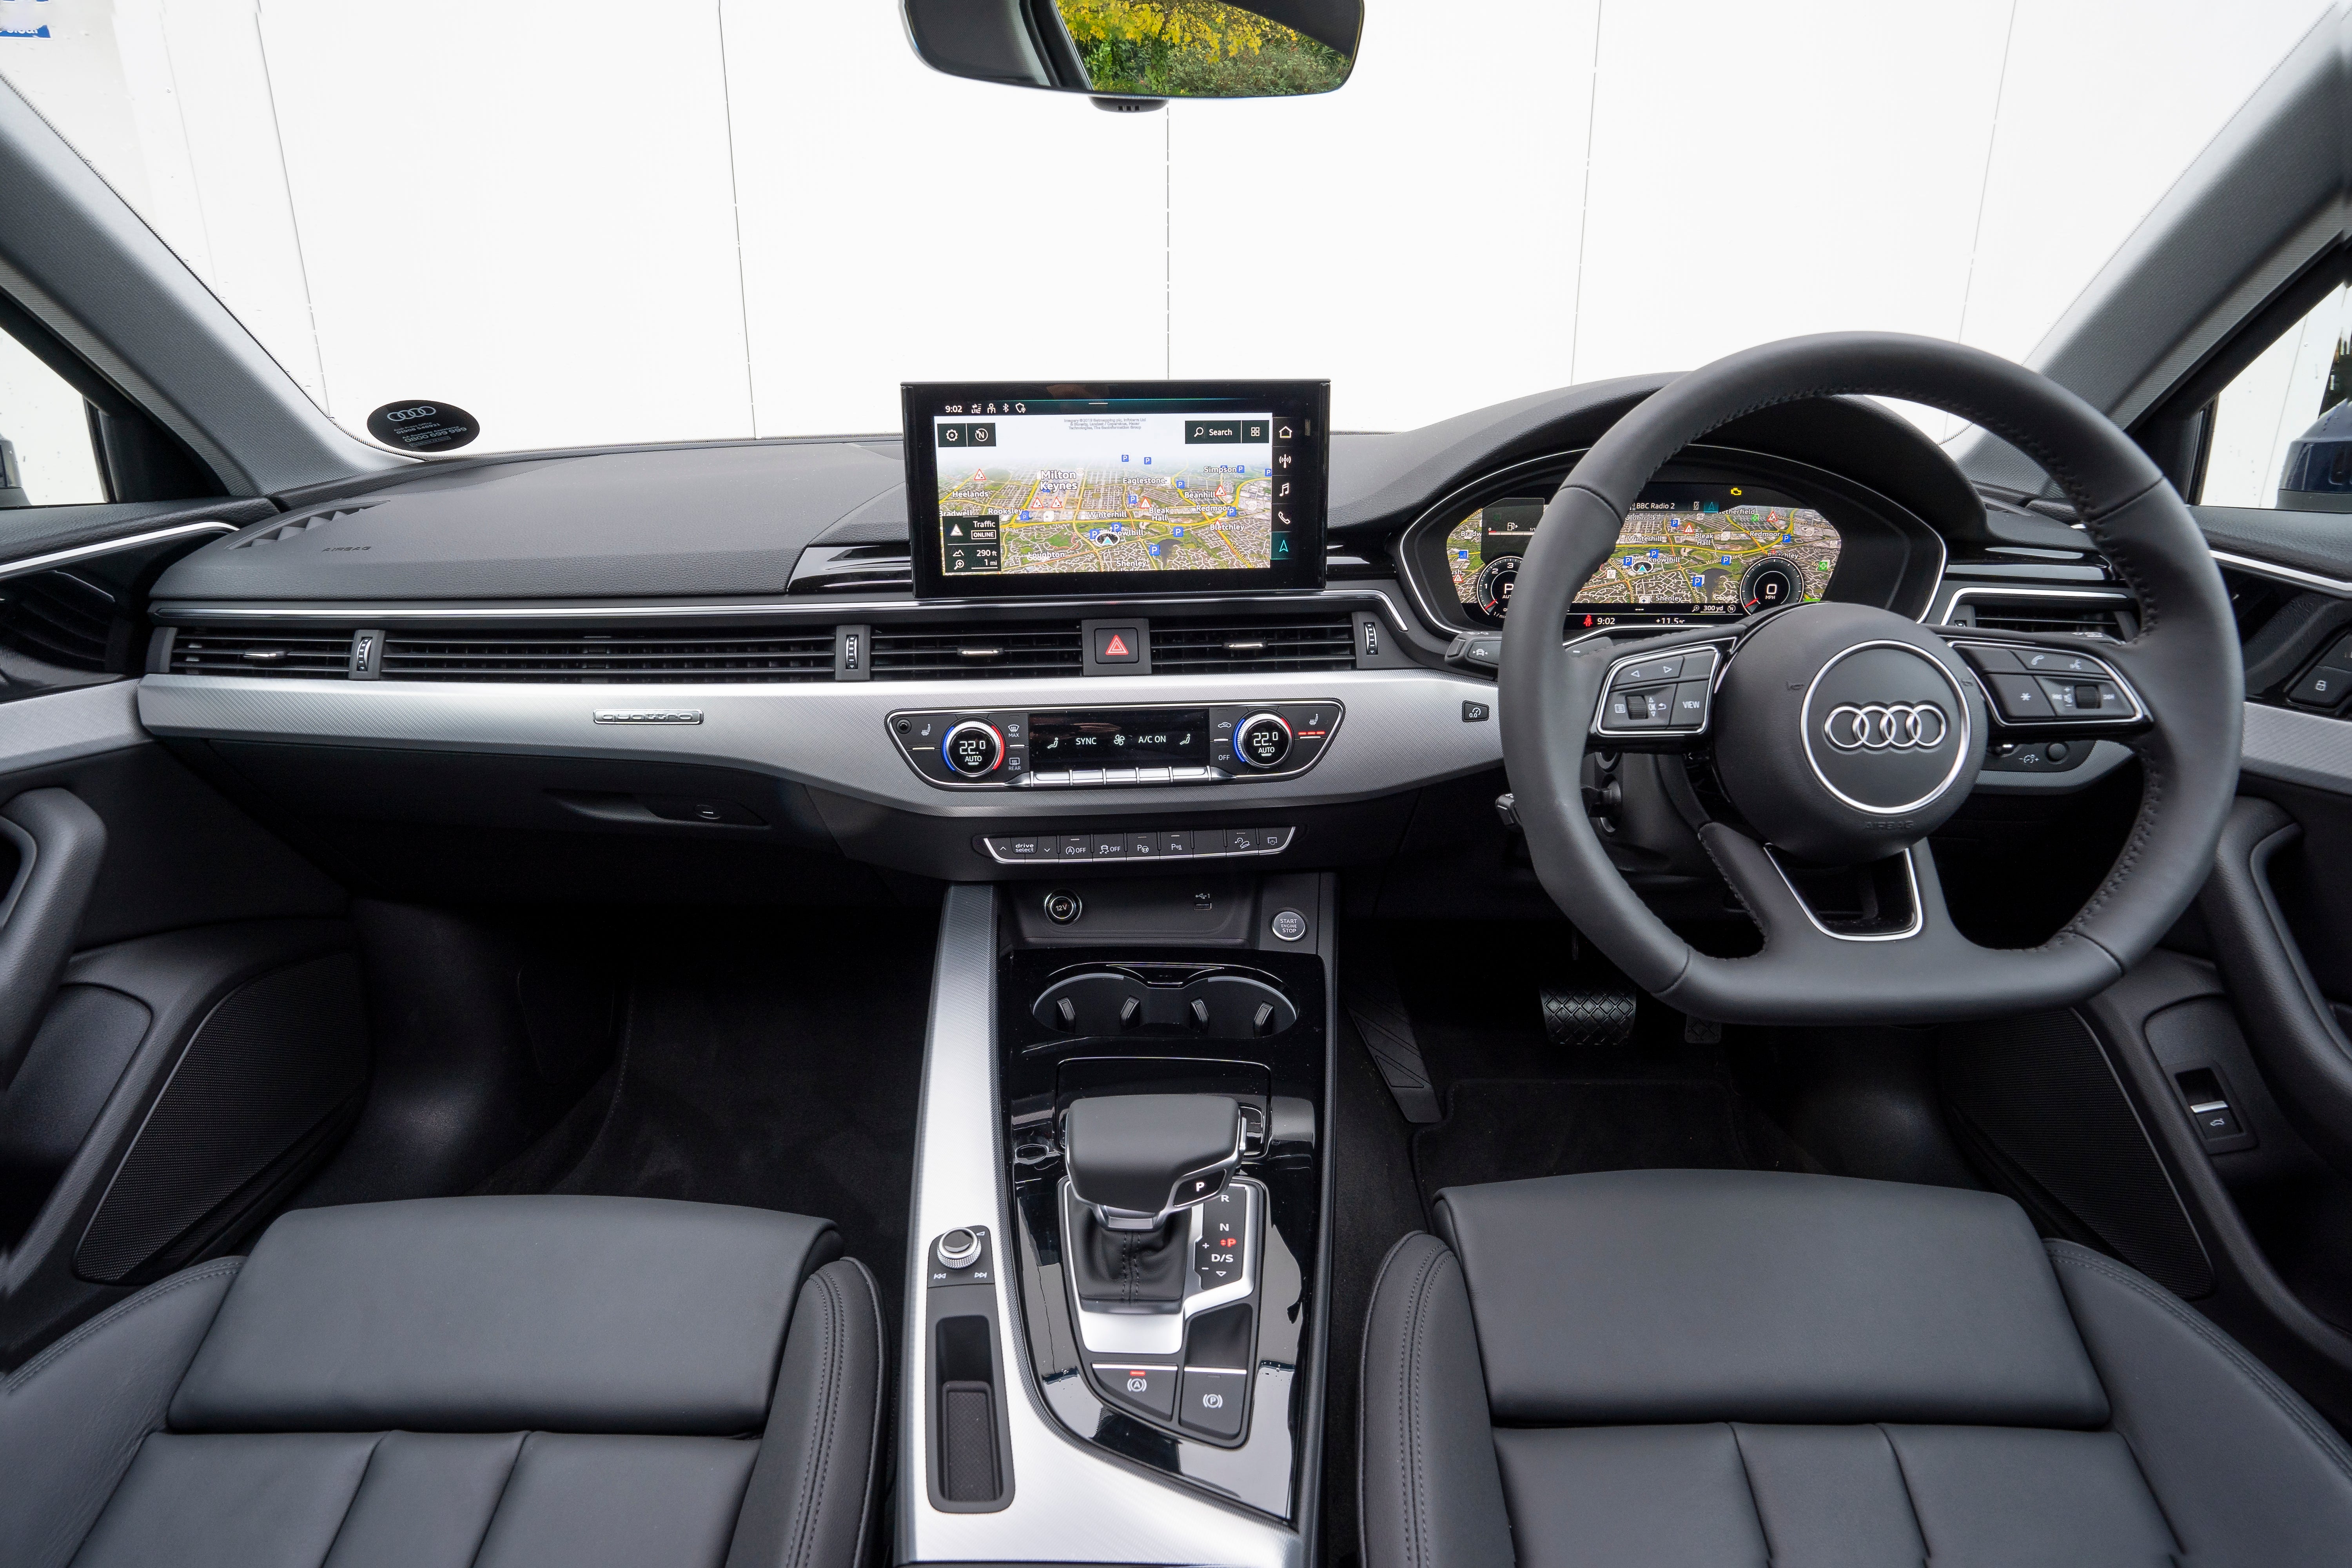 Audi A4 Allroad Interior 